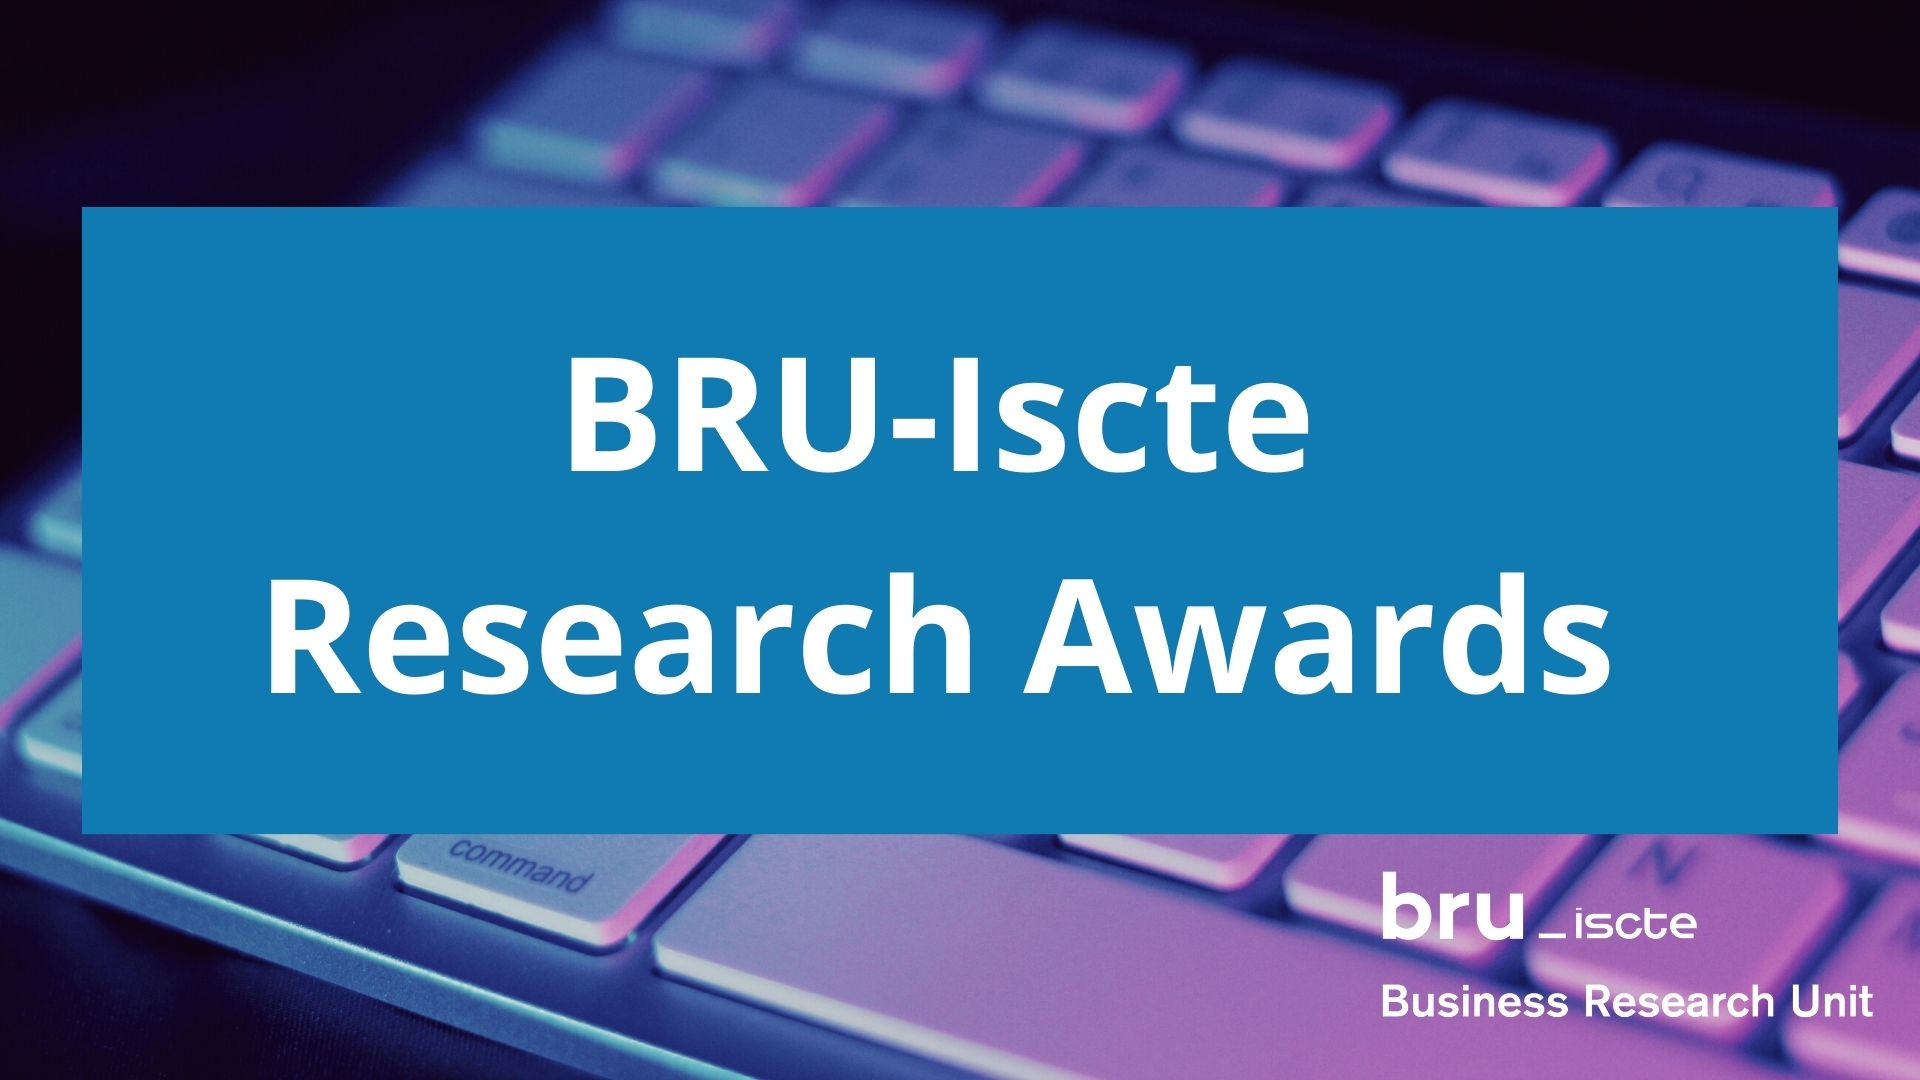 Bru Iscte awards